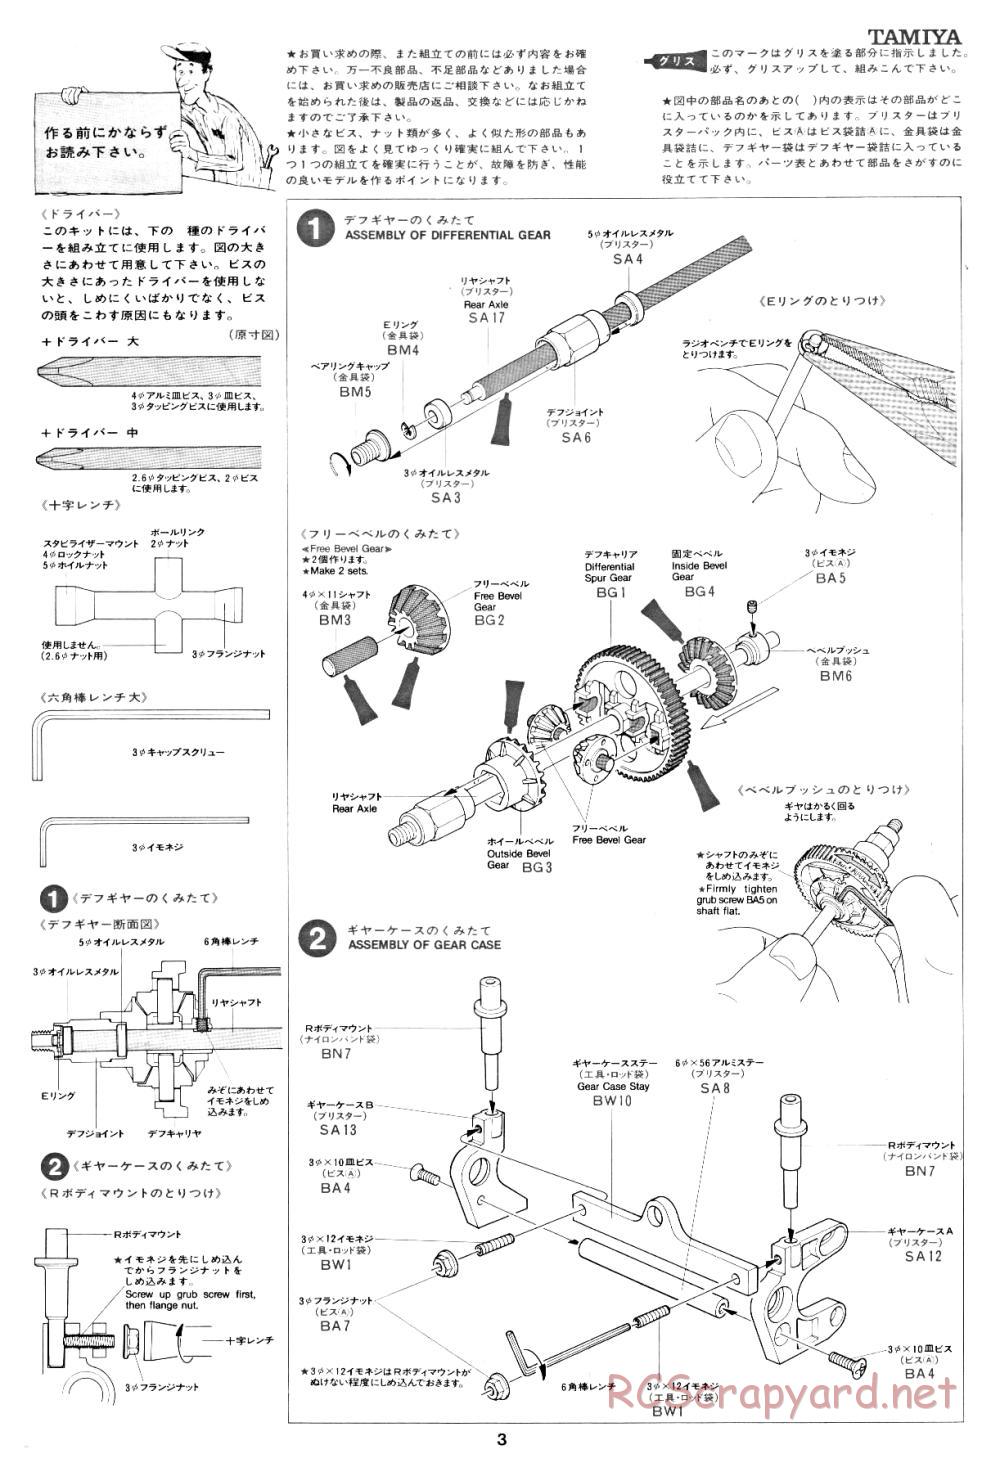 Tamiya - Toyota Tom's 84C - RM MK.6 - 58049 - Manual - Page 3